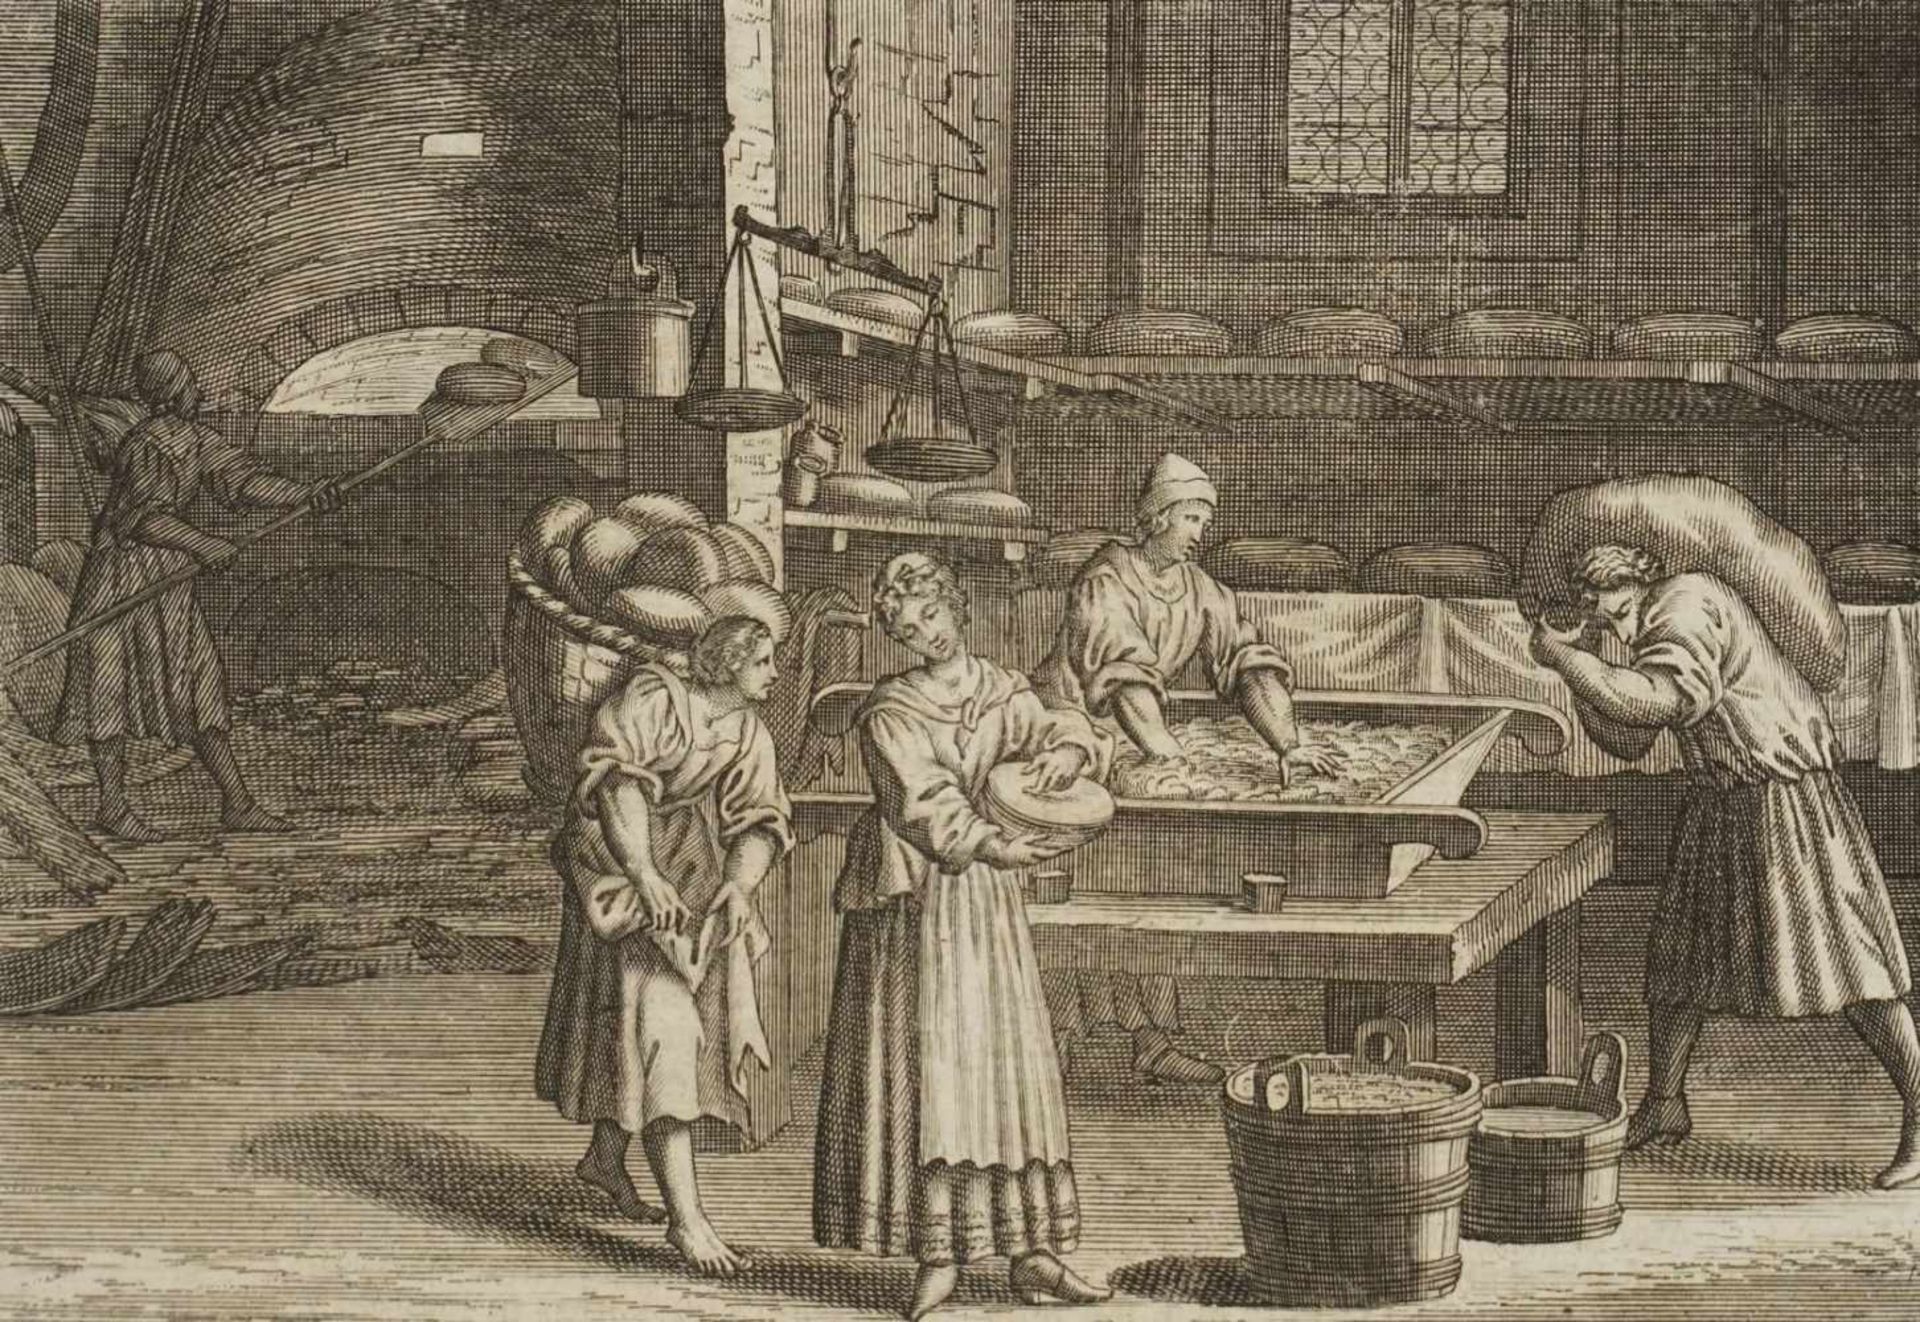 Unbekannter Künstler, "Bäckerei"Kupferstich/Papier, um 1700, Verso Textauszug, guter Zustand,